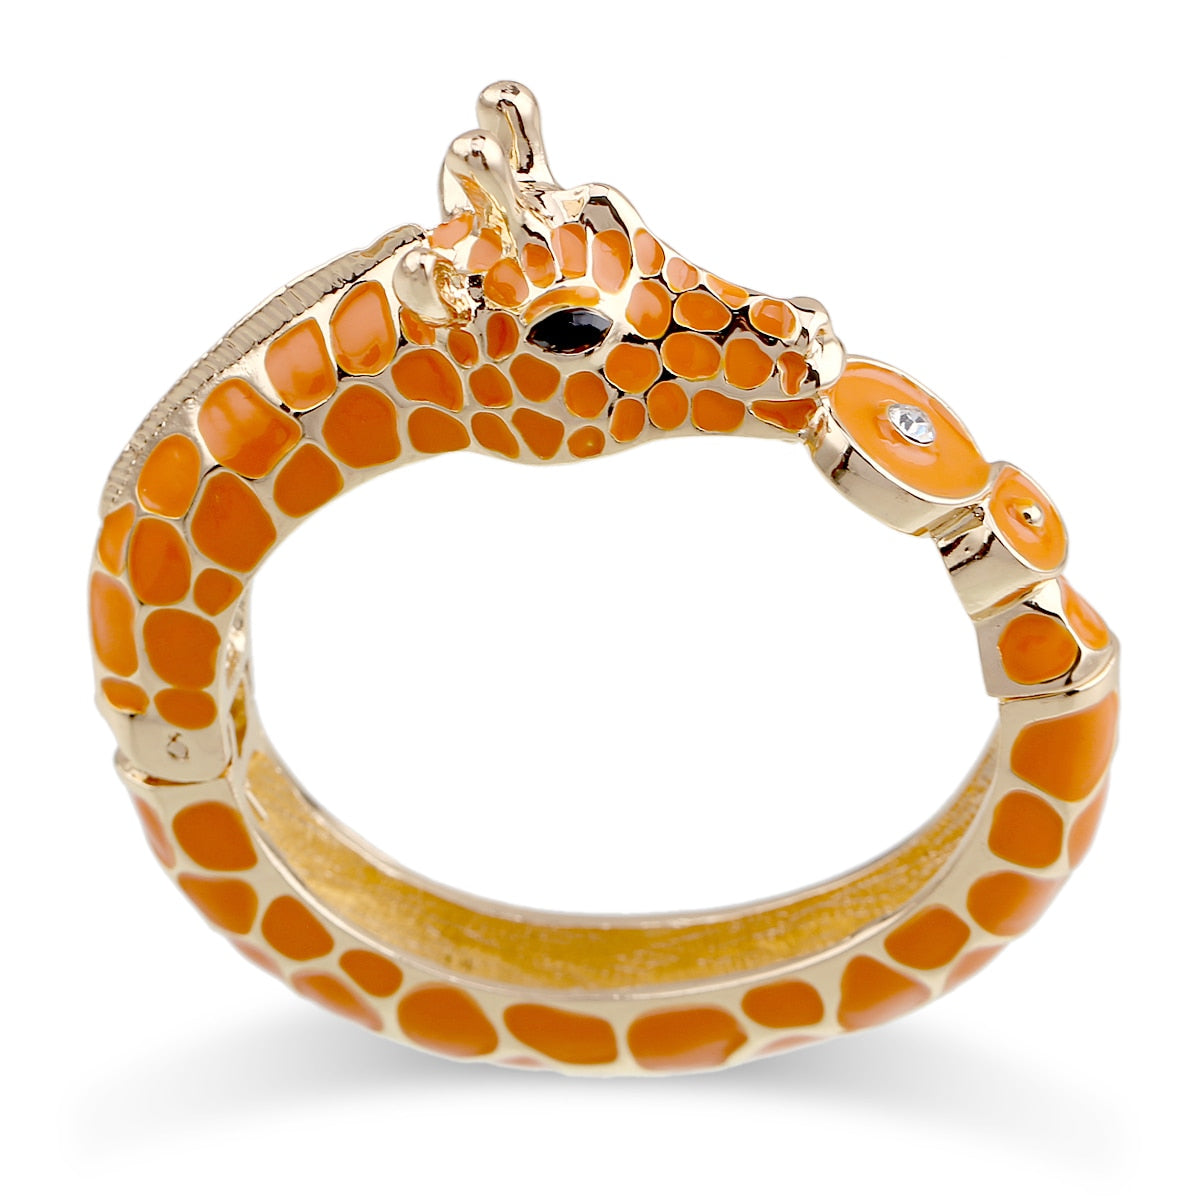 Realistic Giraffe Cuff Bracelet - Style's Bug Orange